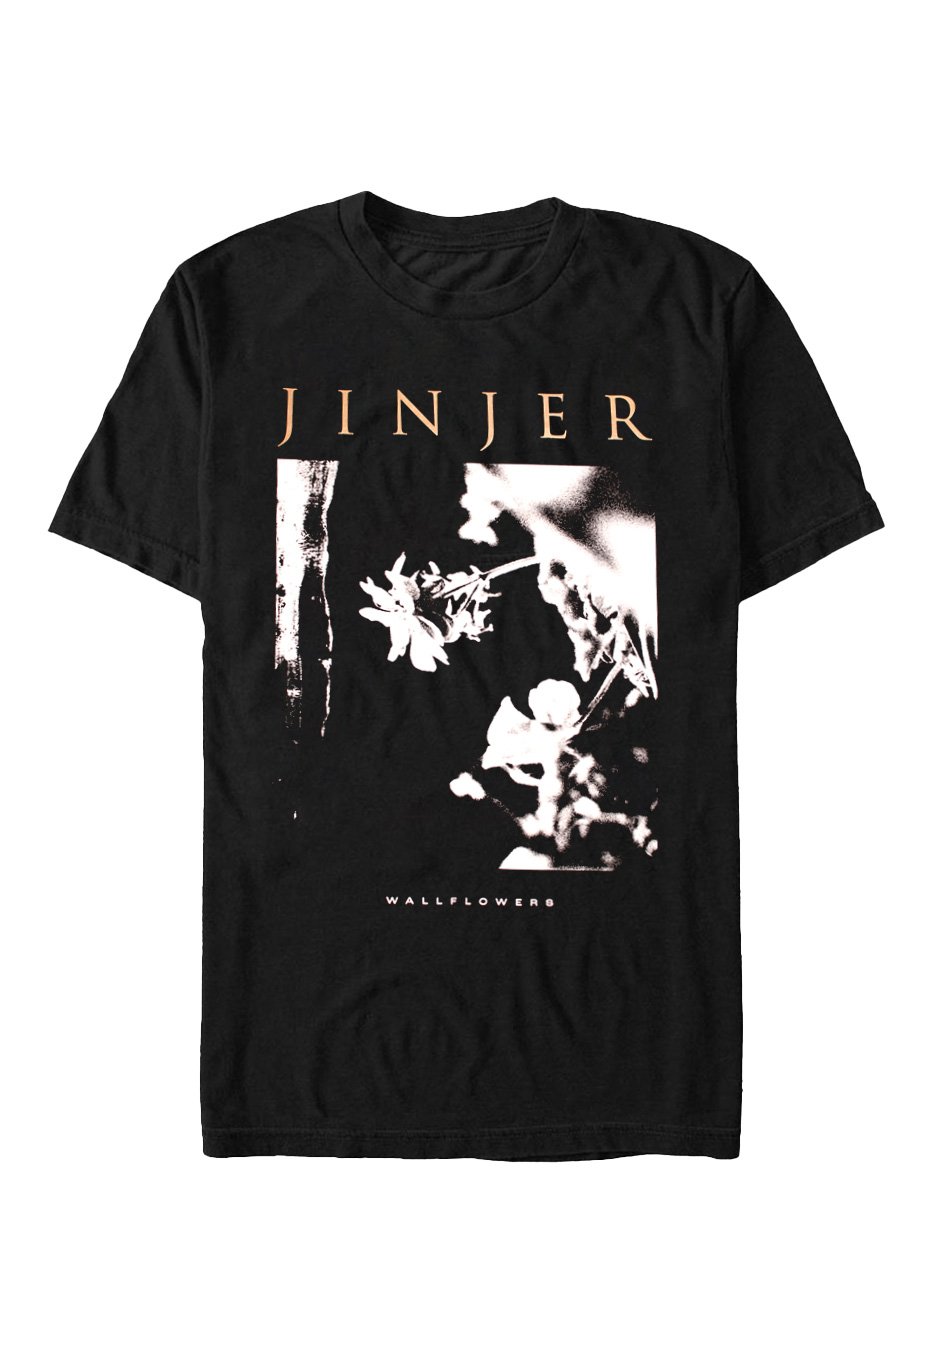 Jinjer - Wallflowers - T-Shirt | Neutral-Image